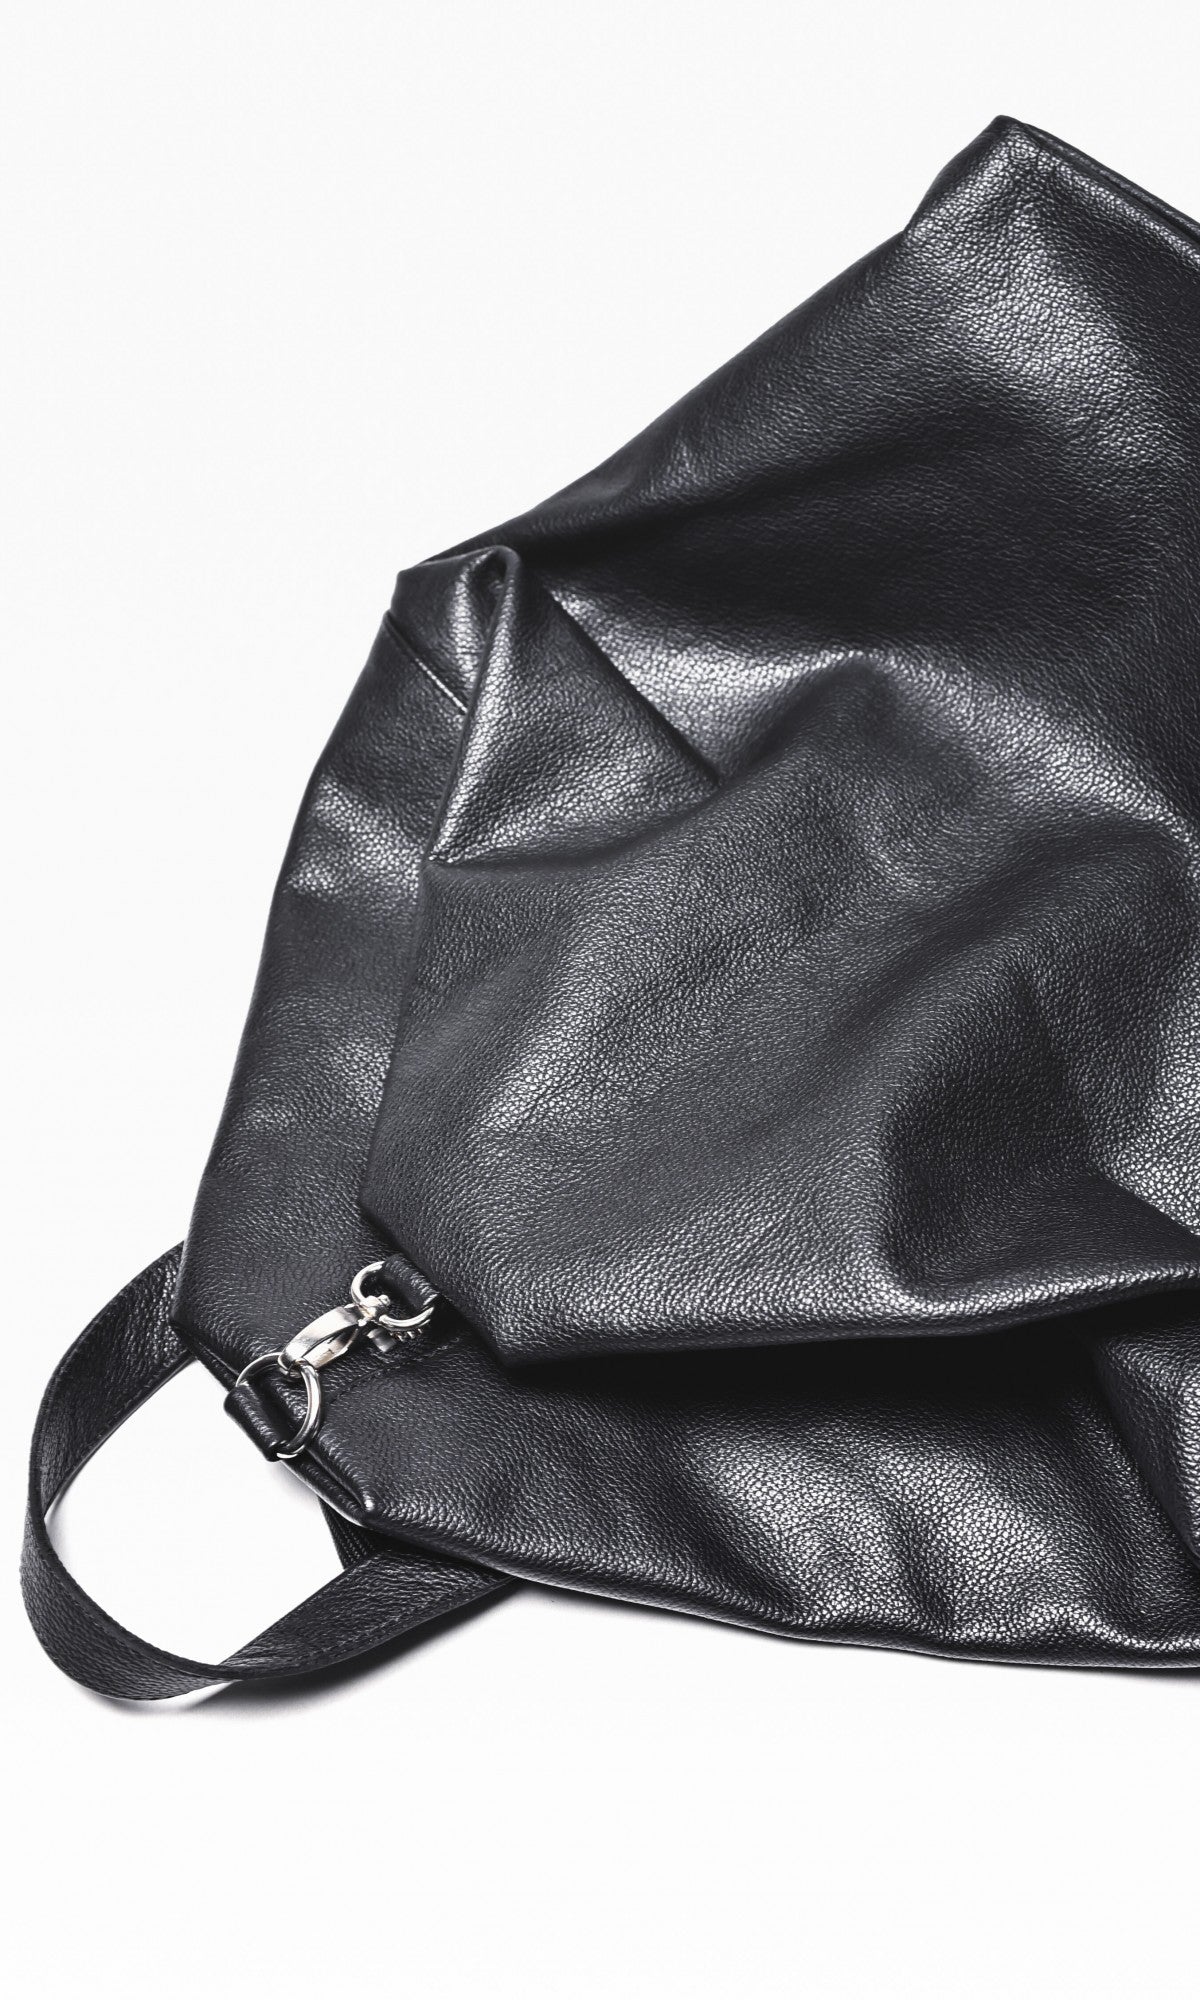 Leather Folding Backpack